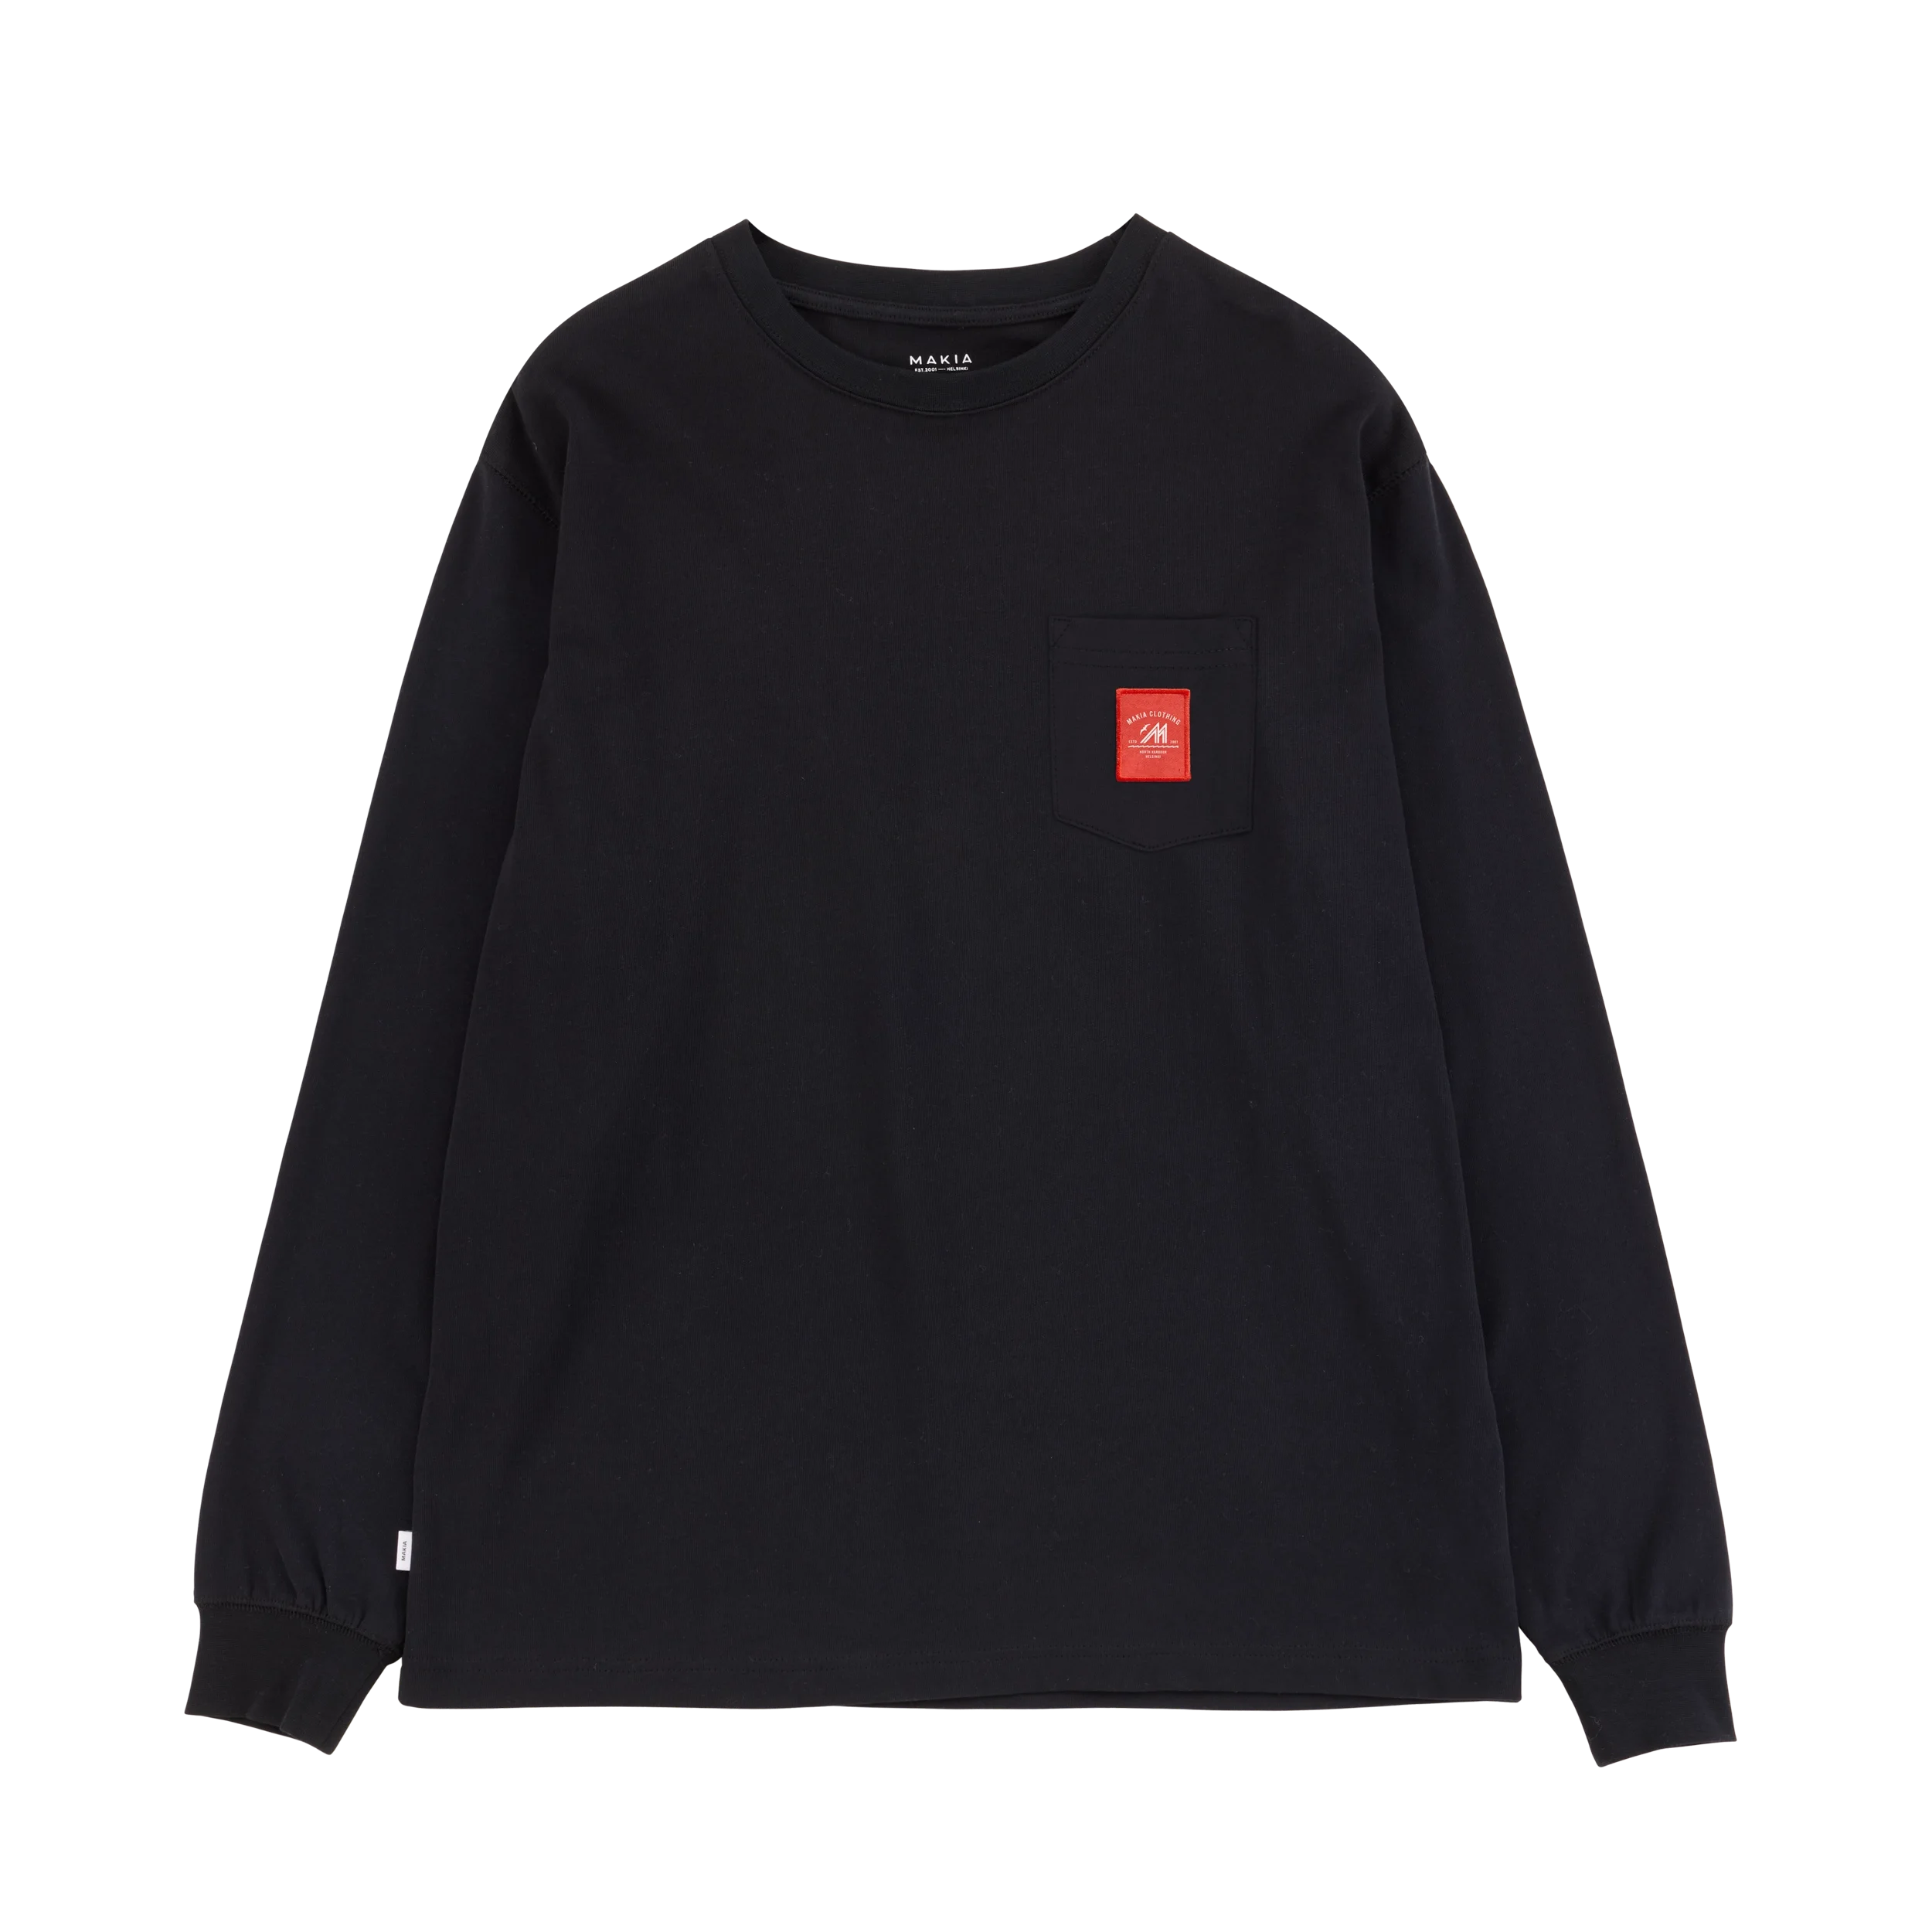 Black sweatshirt with a red Merenkävijät label on the chest pocket